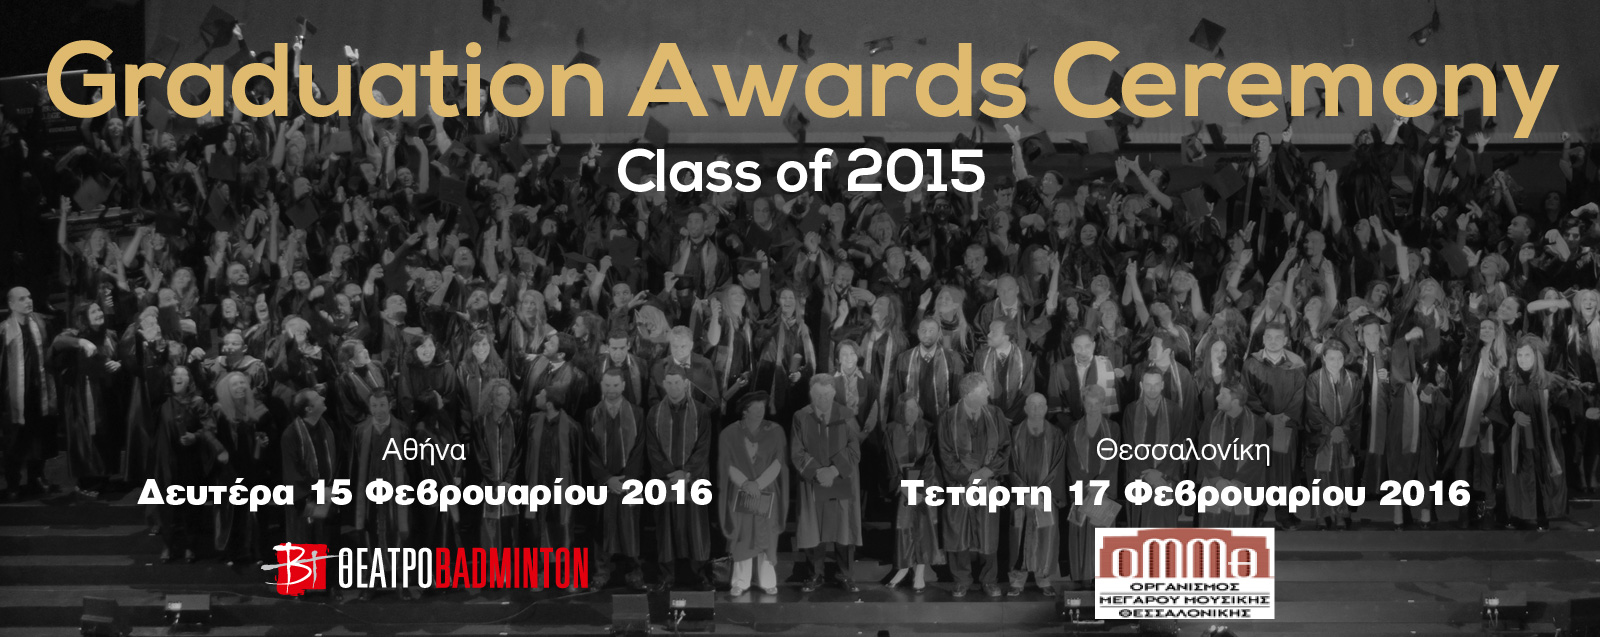 Mediterranean College: 36η Τελετή Αποφοίτησης της Τάξης 2015